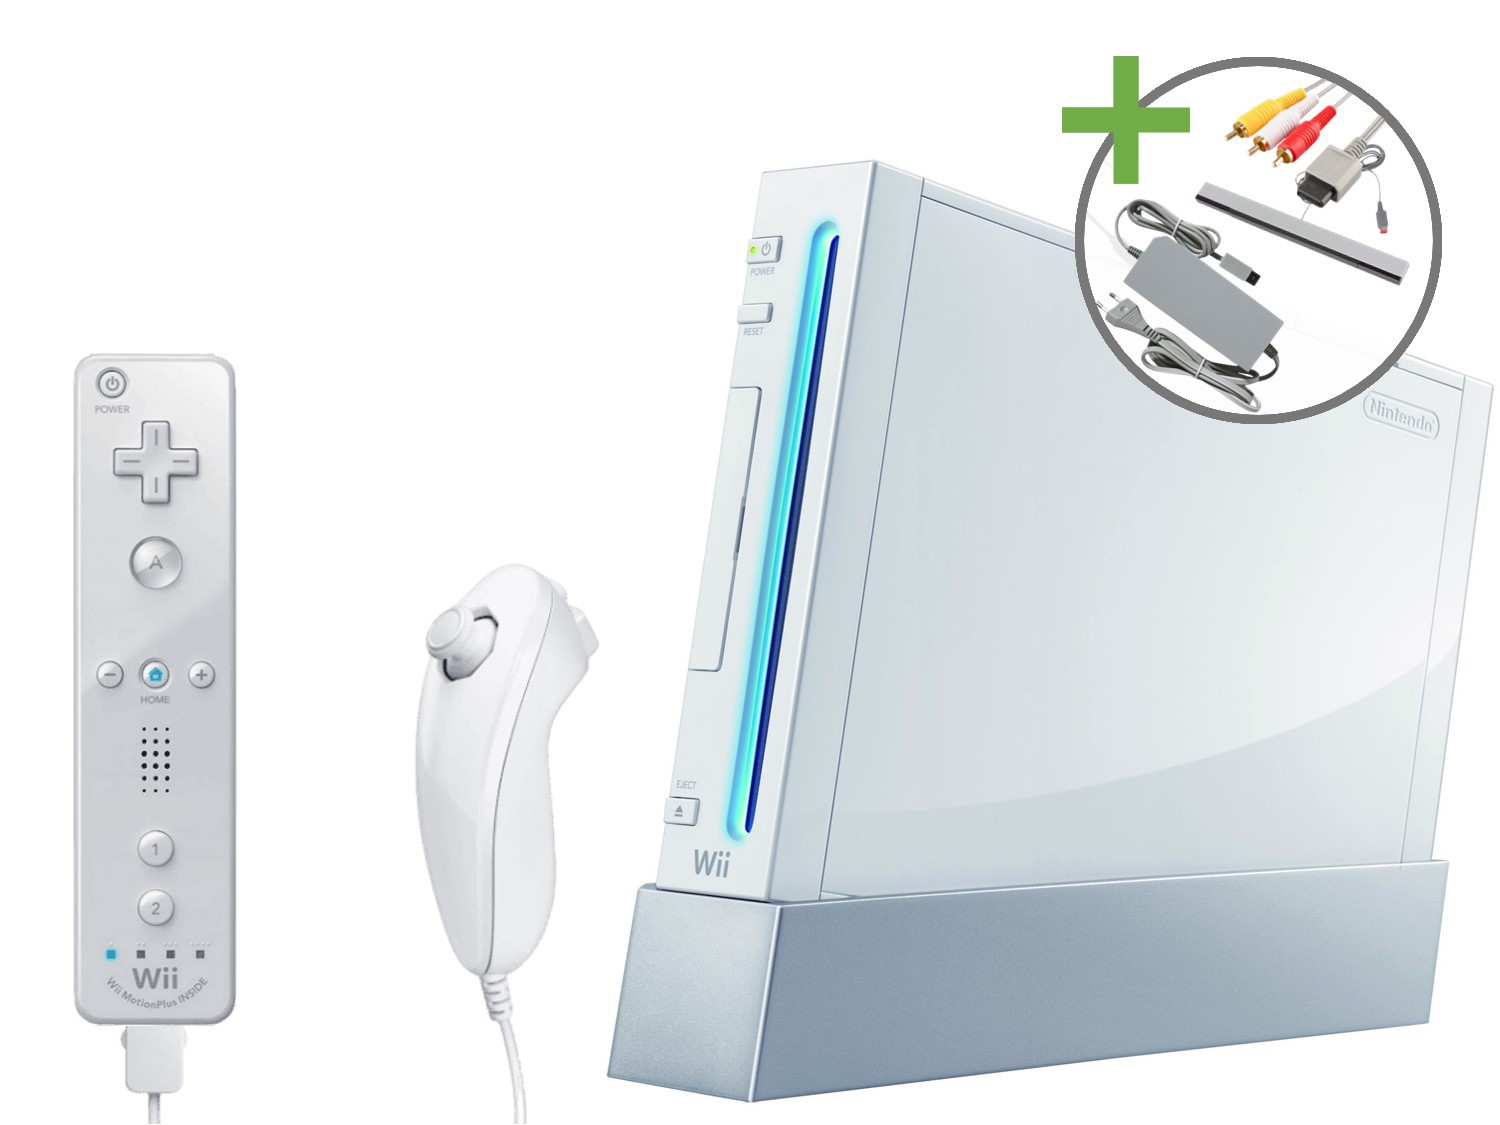 Nintendo Wii Starter Pack - Motion Plus White Edition - Wii Hardware